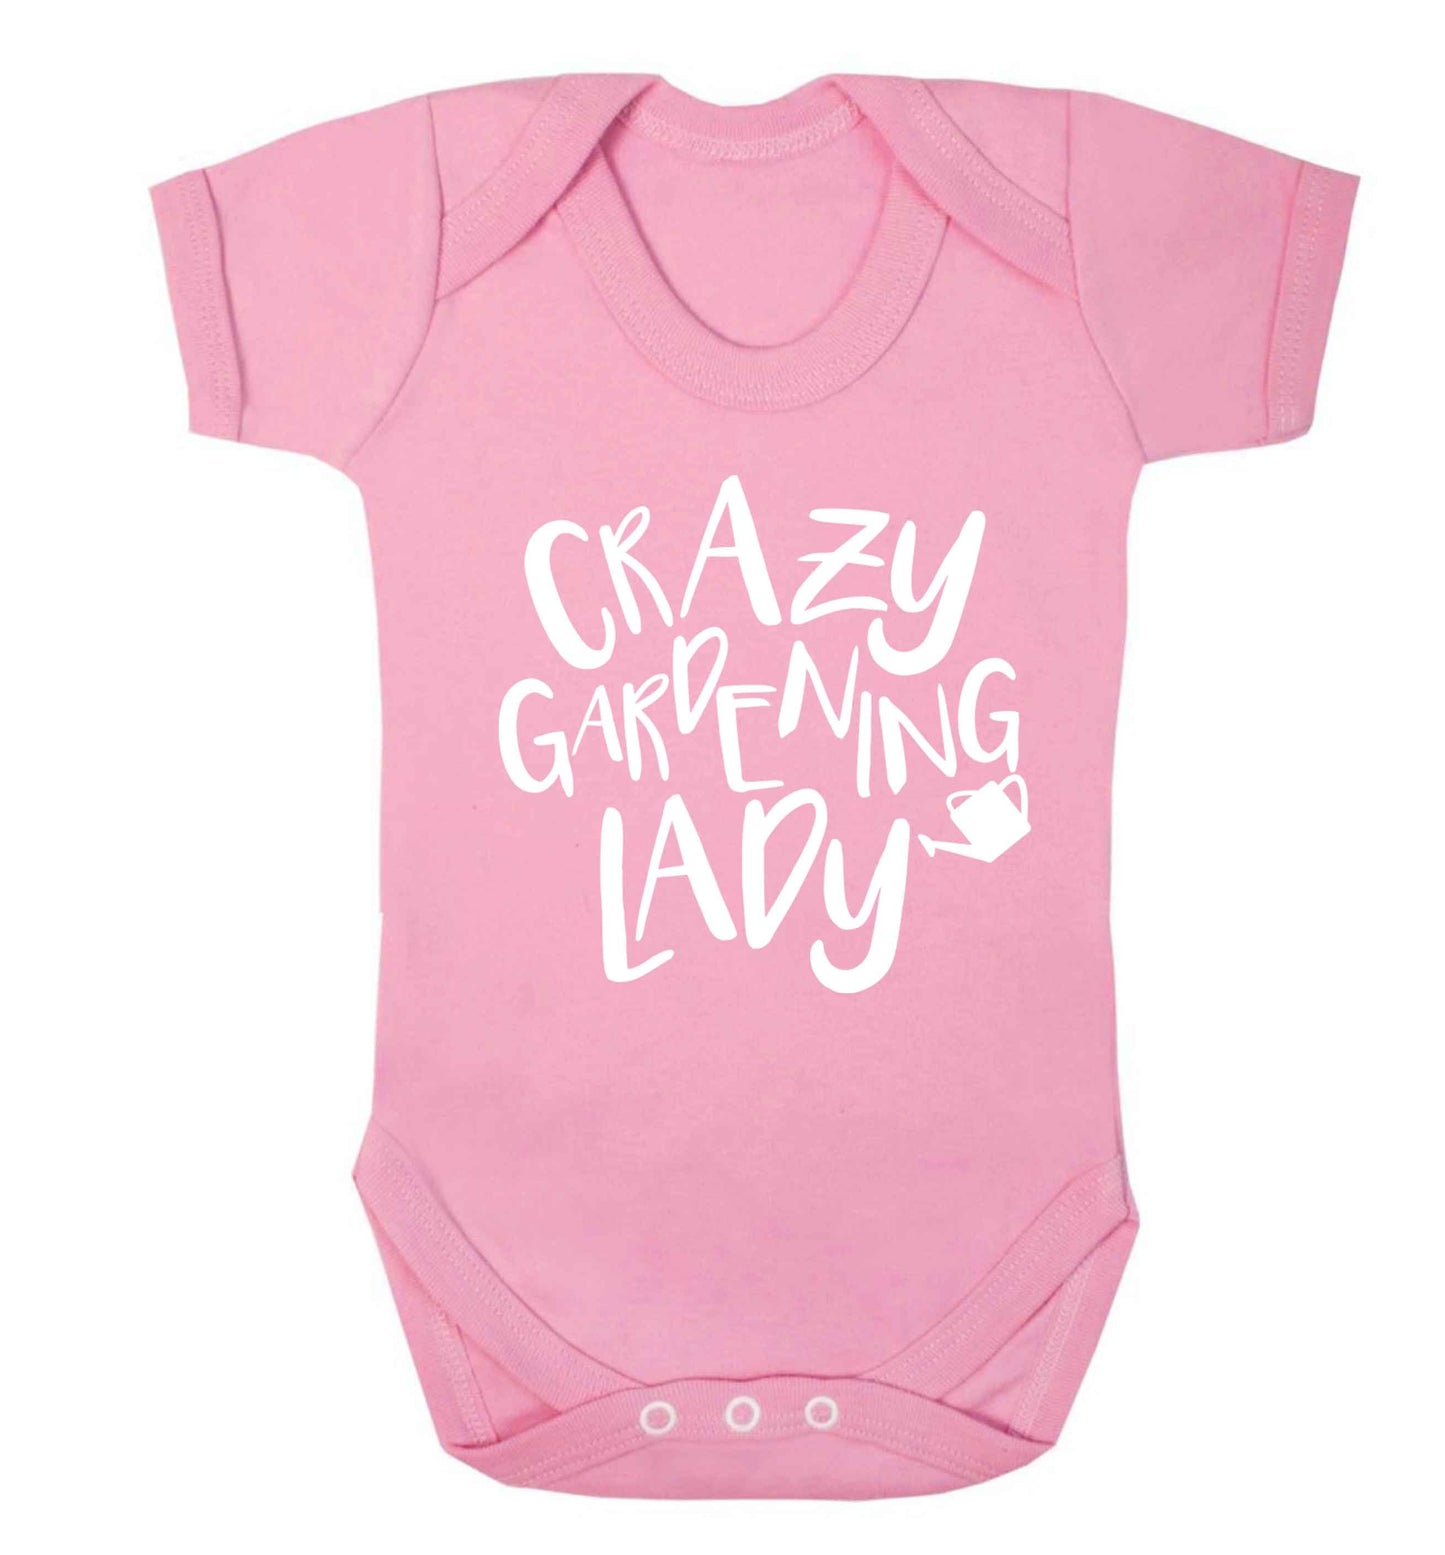 Crazy gardening lady Baby Vest pale pink 18-24 months